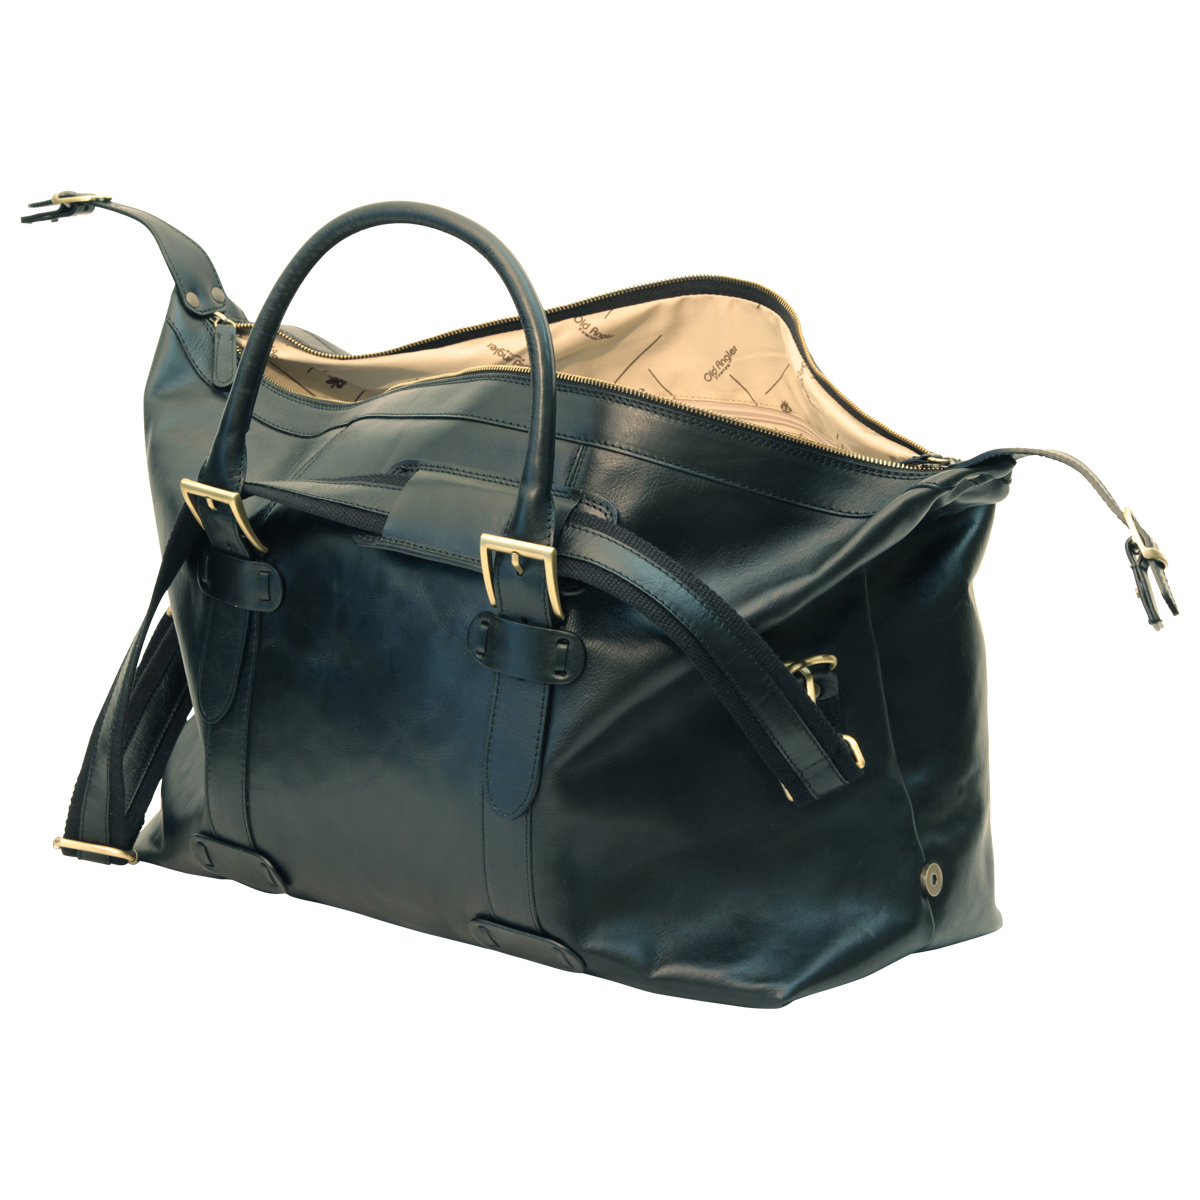 Cowhide leather Travel Bag - Black | 410689NE | EURO | Old Angler Firenze